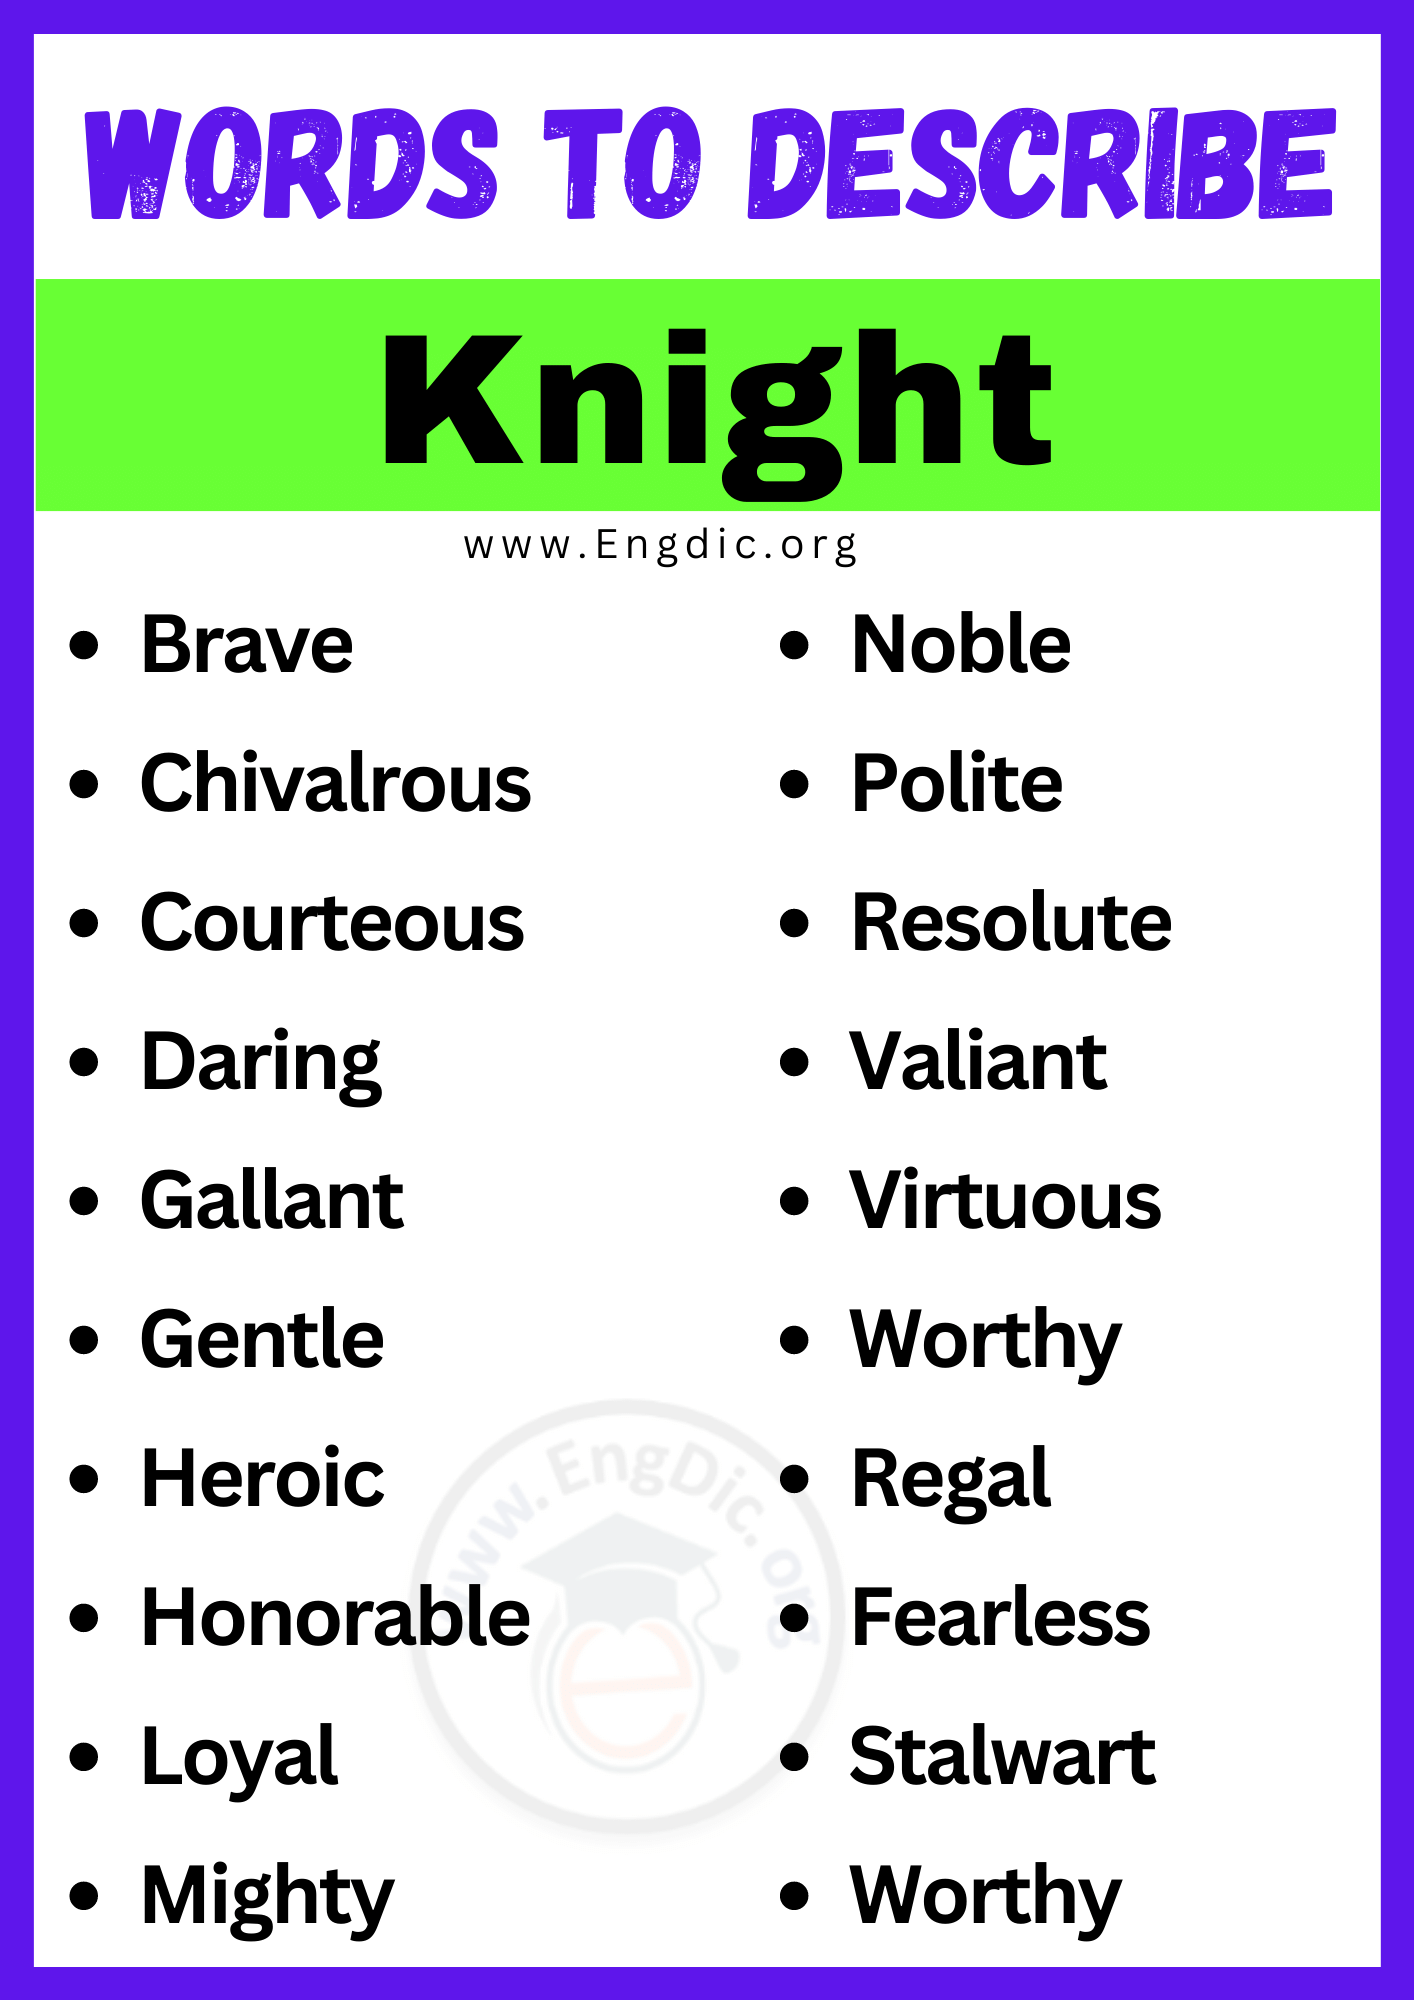 Words to Describe Knight